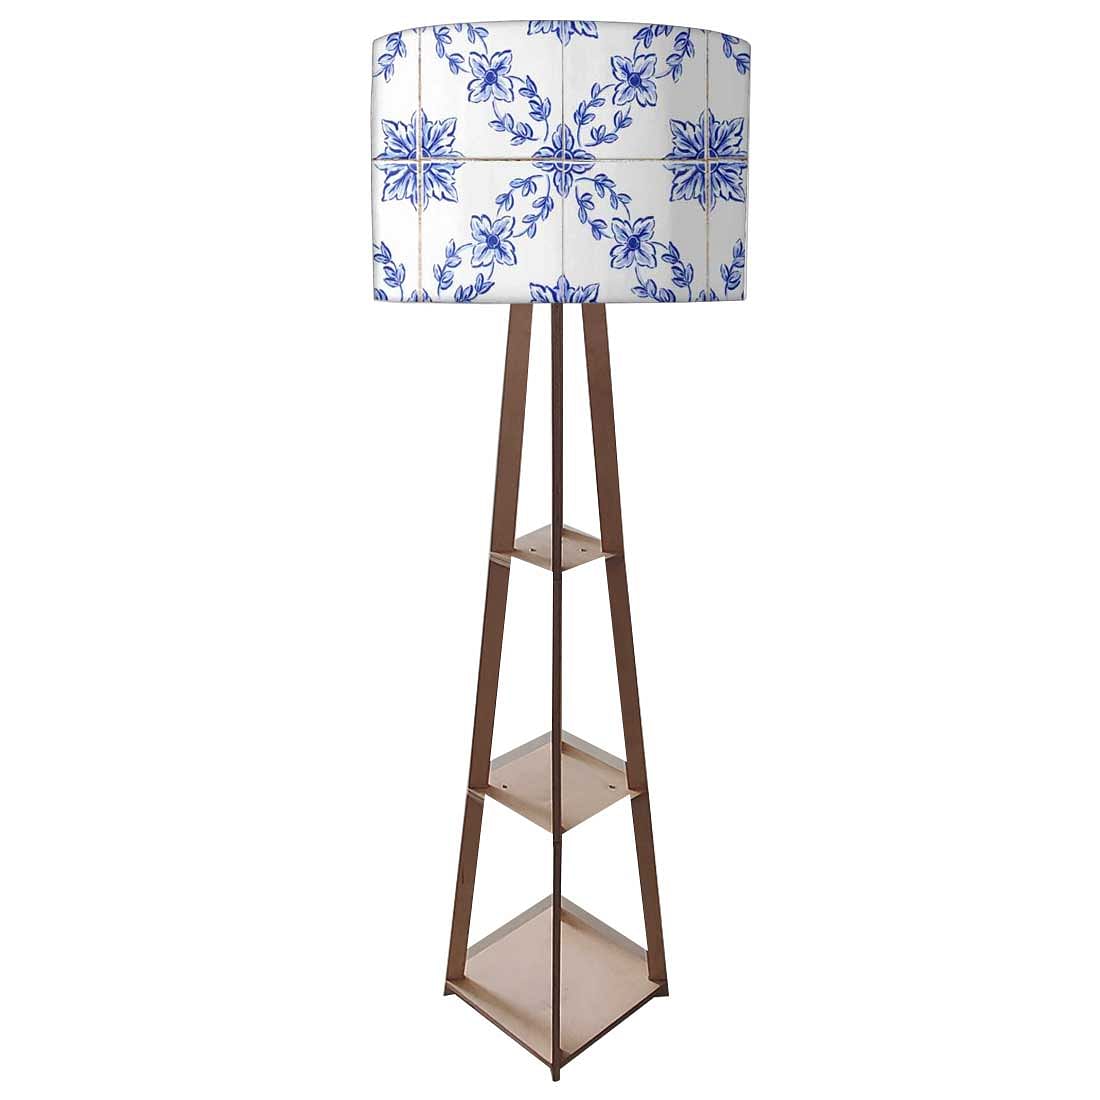 Wooden Corner Lamps with Shelves - Spanish Tiles Nutcase